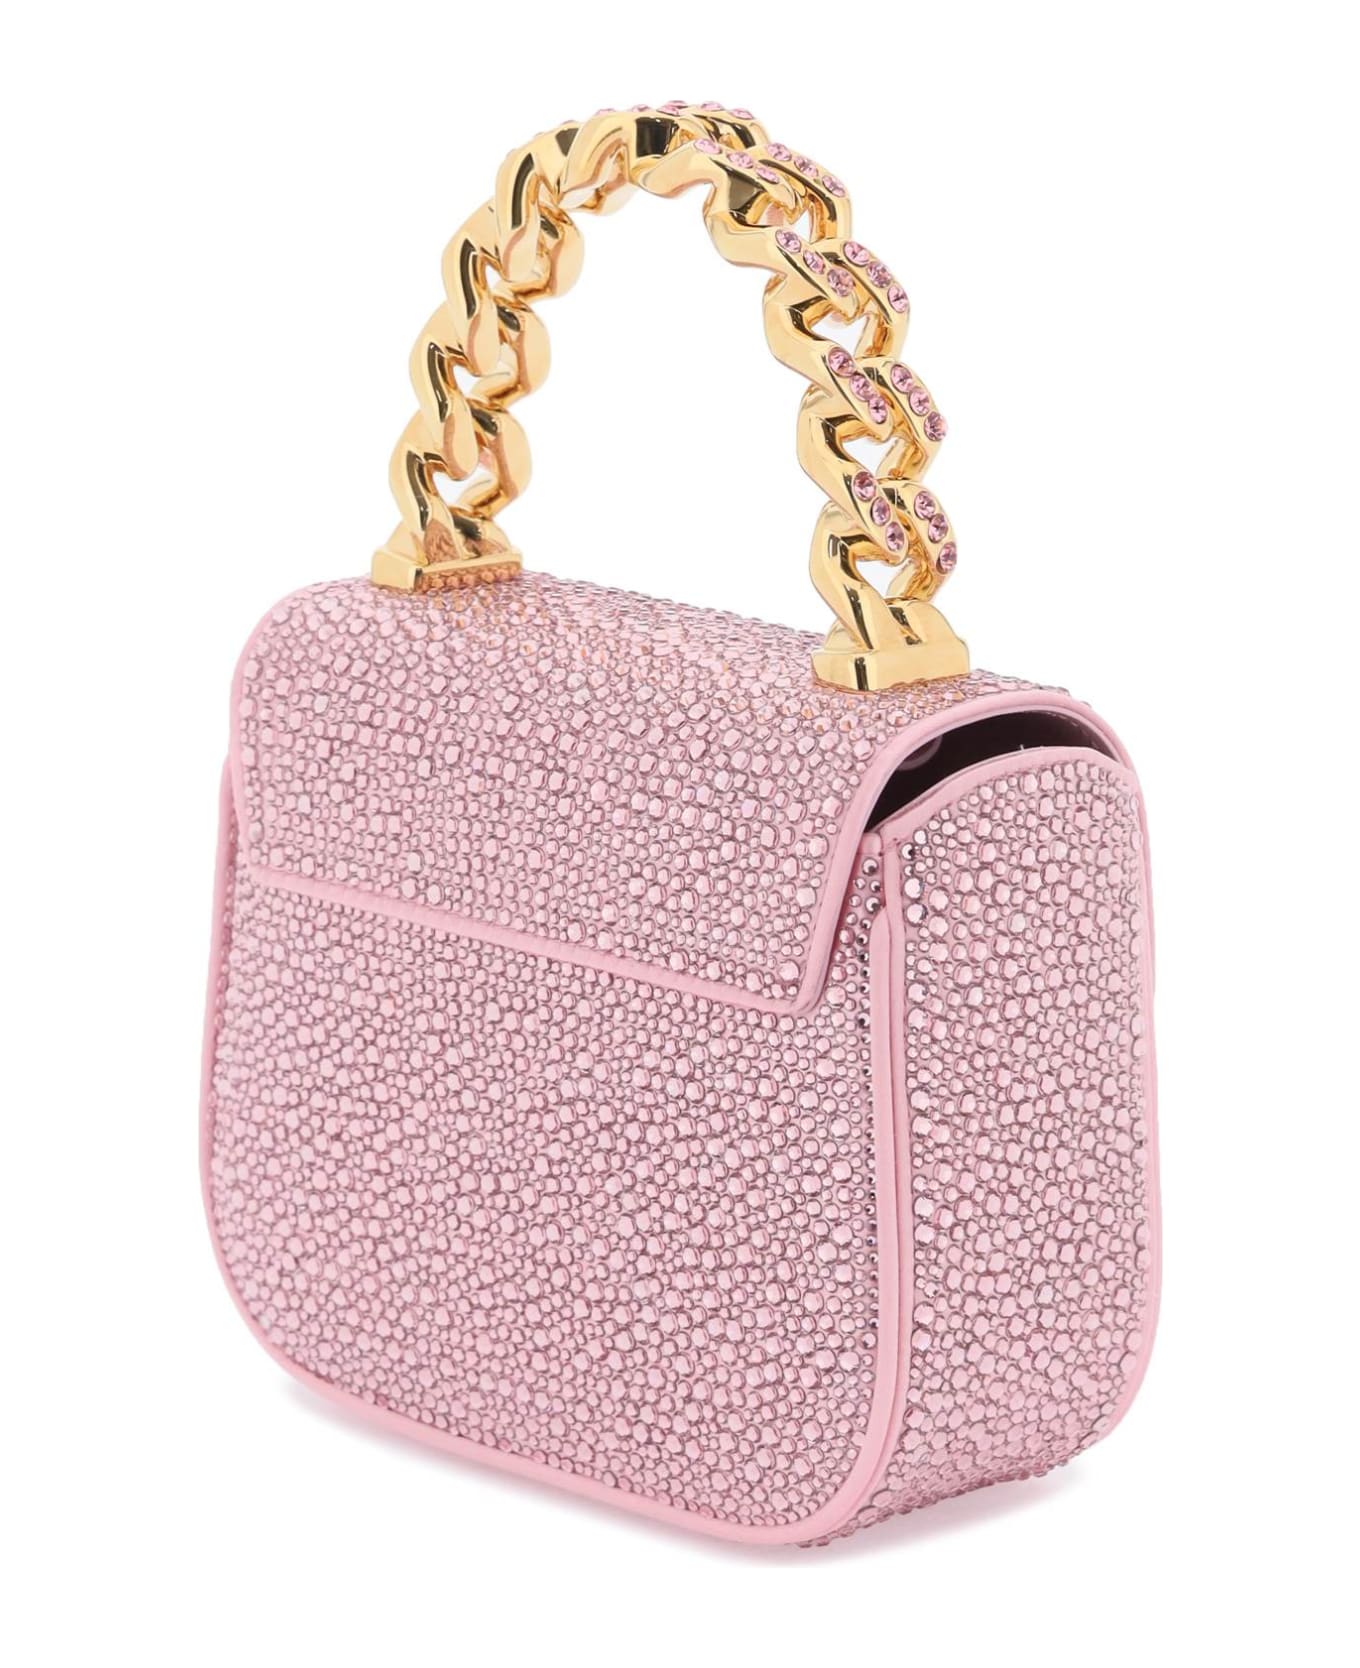 Versace La Medusa Handbag With Crystals - PALE PINK VERSACE GOLD (Pink)